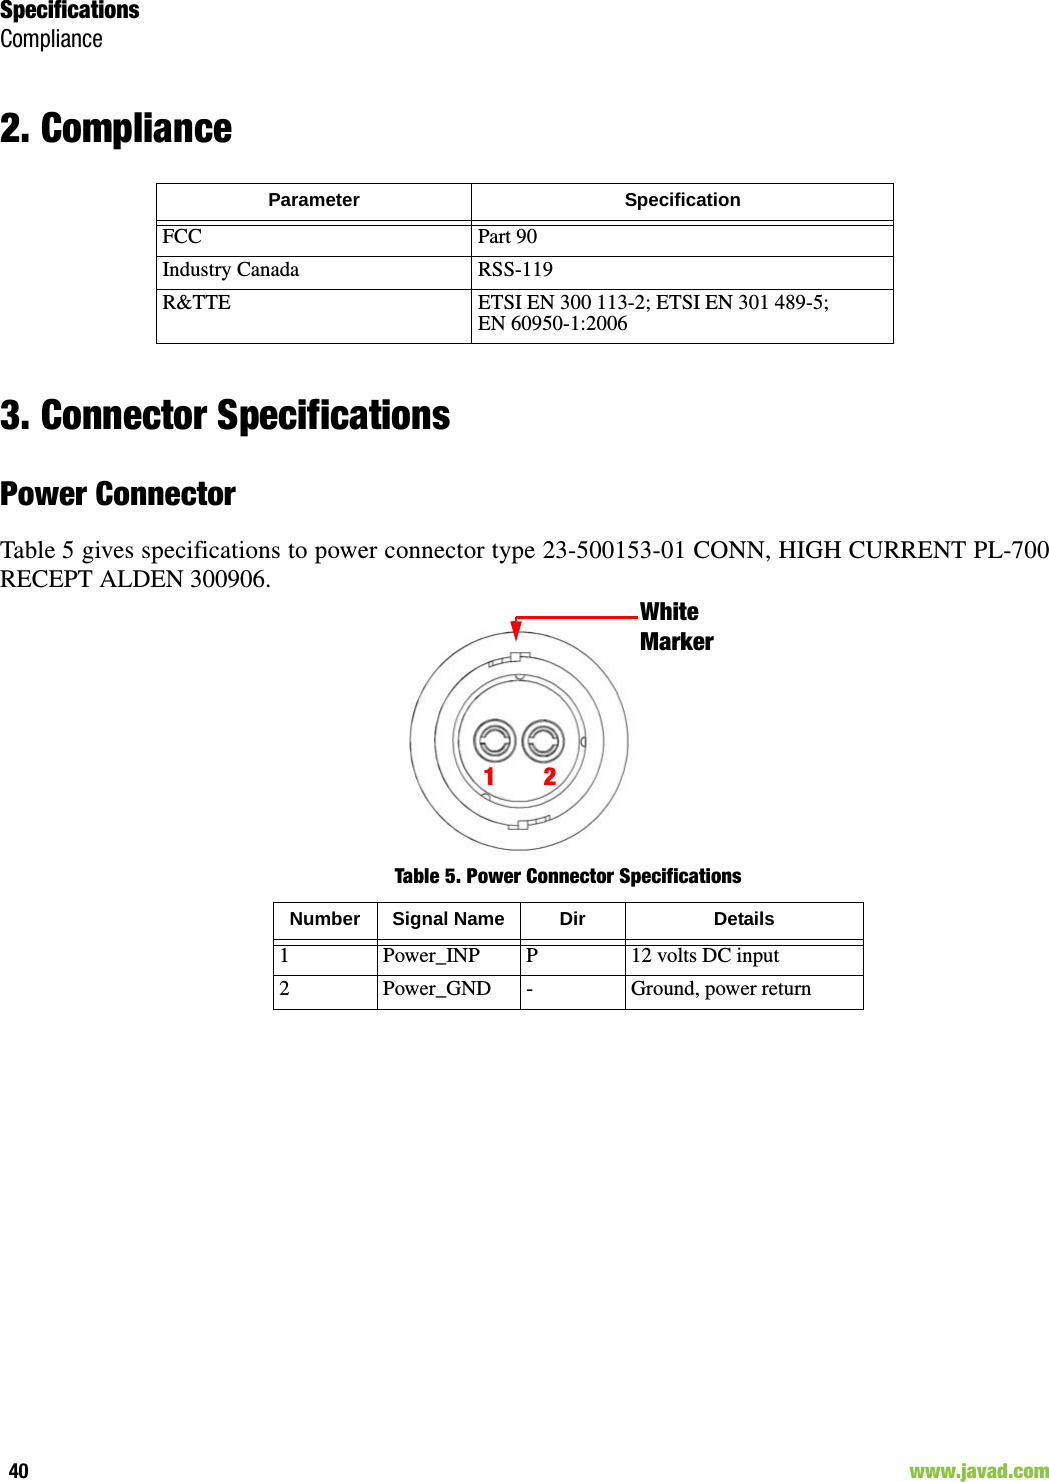 SpecificationsCompliance40                                                                                                                     www.javad.com2. Compliance3. Connector SpecificationsPower ConnectorTable 5 gives specifications to power connector type 23-500153-01 CONN, HIGH CURRENT PL-700RECEPT ALDEN 300906.Table 5. Power Connector SpecificationsParameter SpecificationFCC Part 90 Industry Canada RSS-119R&amp;TTE ETSI EN 300 113-2; ETSI EN 301 489-5; EN 60950-1:200612White MarkerNumber Signal Name Dir Details1 Power_INP P 12 volts DC input2 Power_GND - Ground, power return